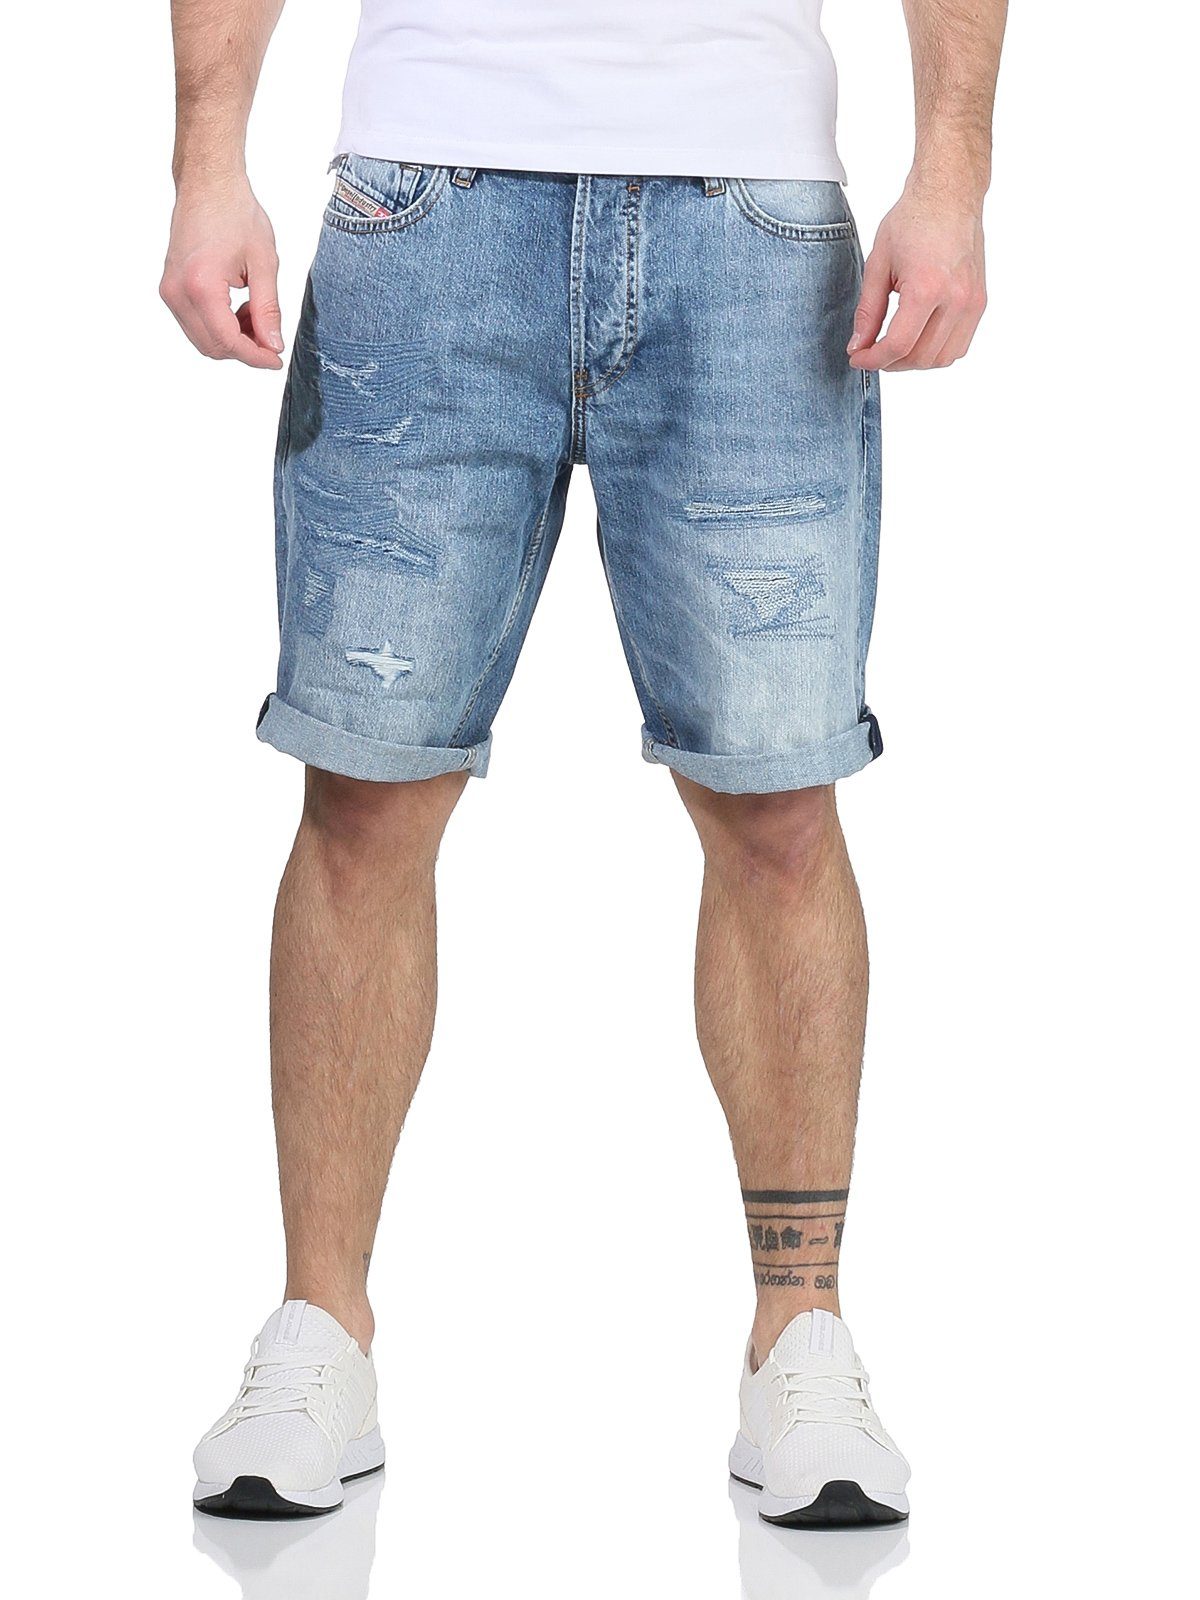 Blau Vintage RB012 Herren Shorts kurze RG48R Kroshort Shorts, Diesel Jeansshorts Used-Look Jeans Hose dezenter Look